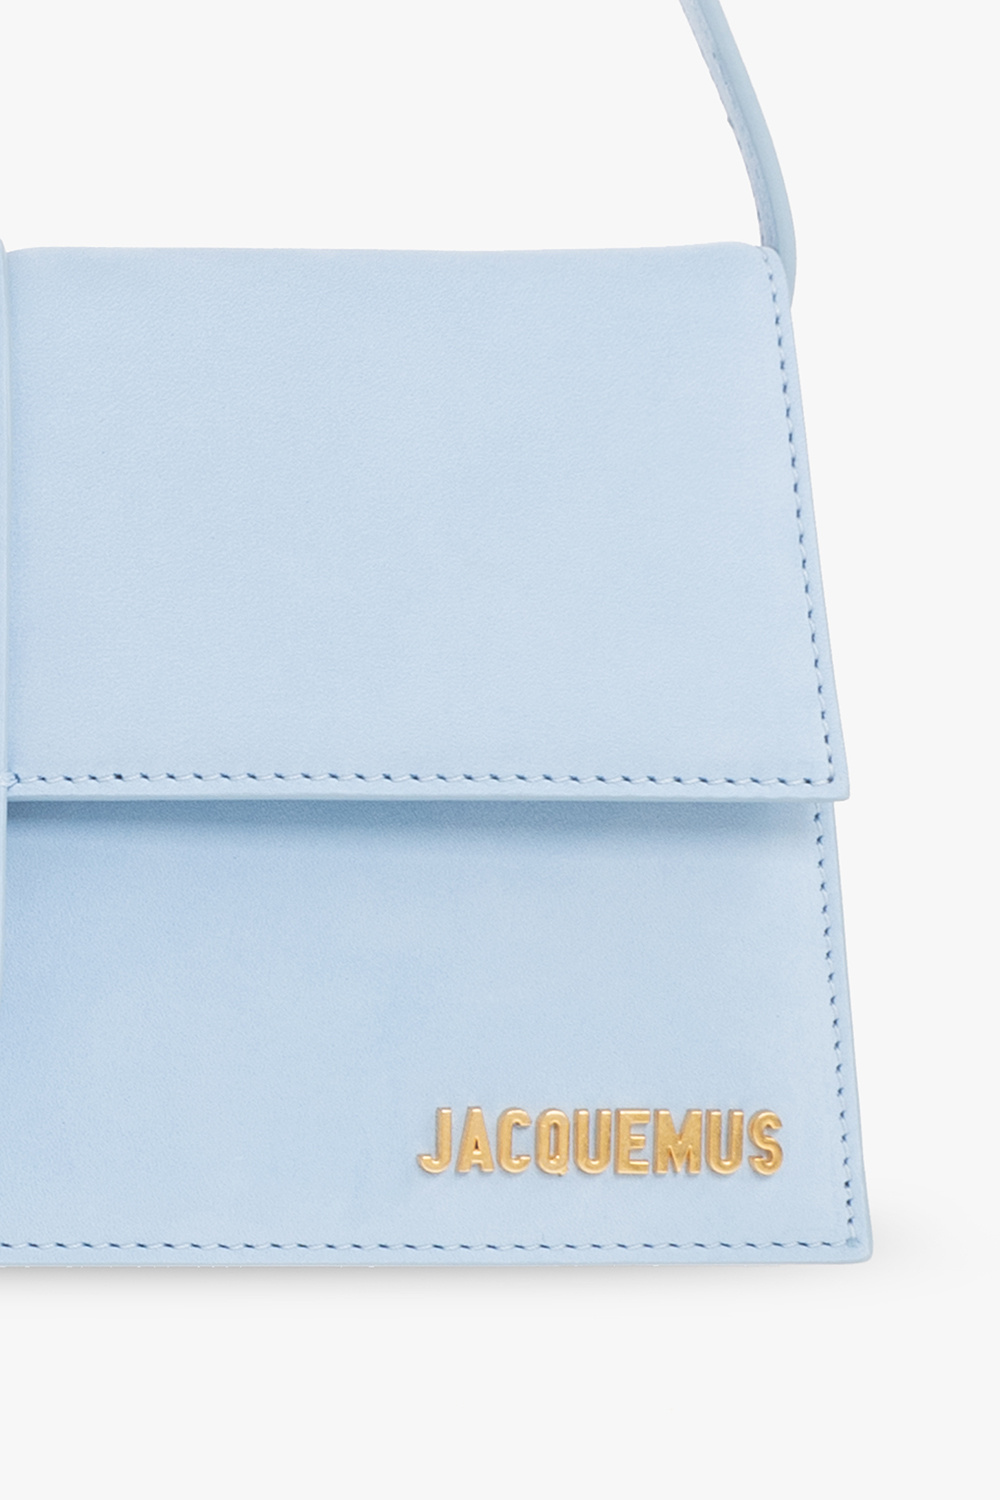 Jacquemus ‘Le Bambino Long’ shoulder bag